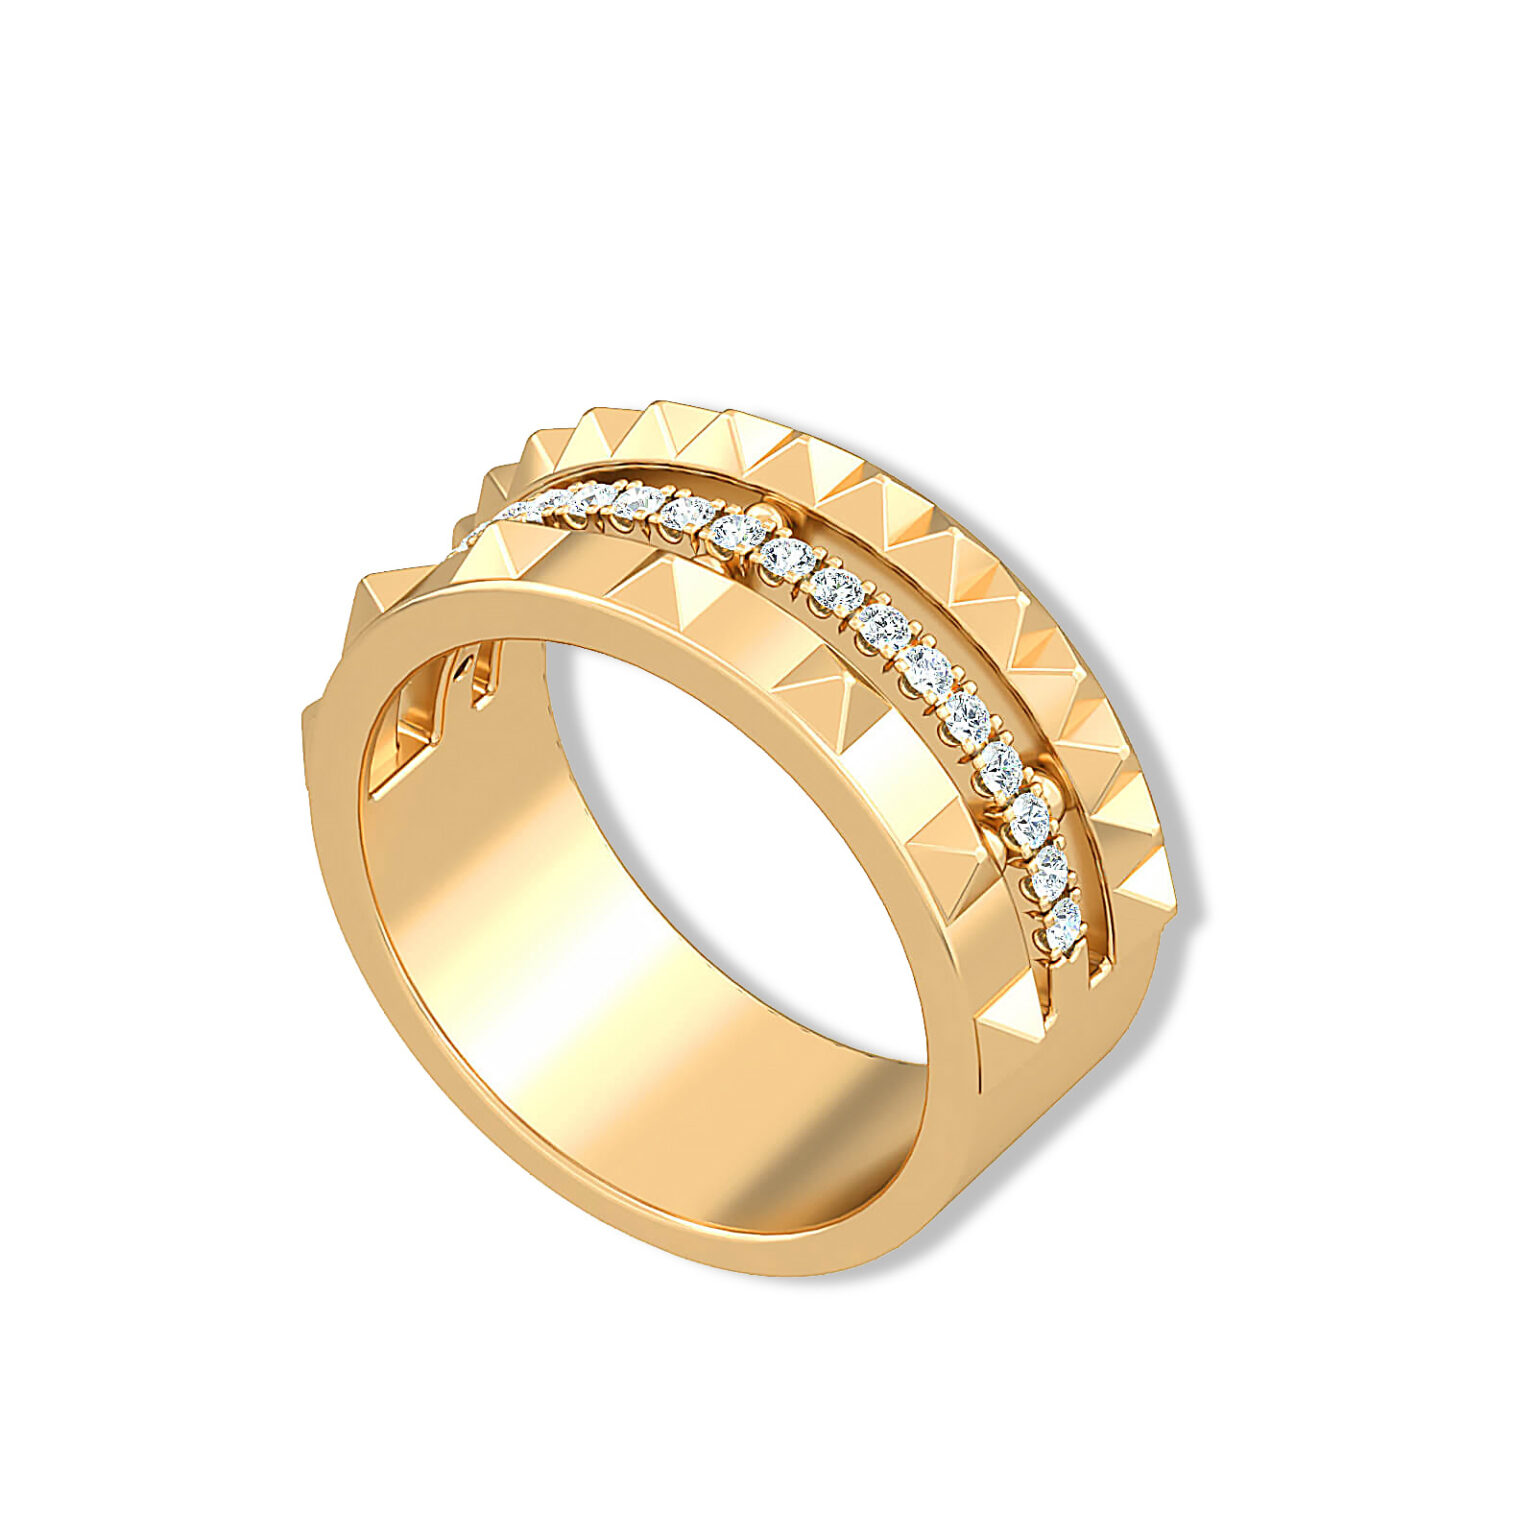 Aquae Jewels | Customized 18k gold, diamond and precious stone pieces